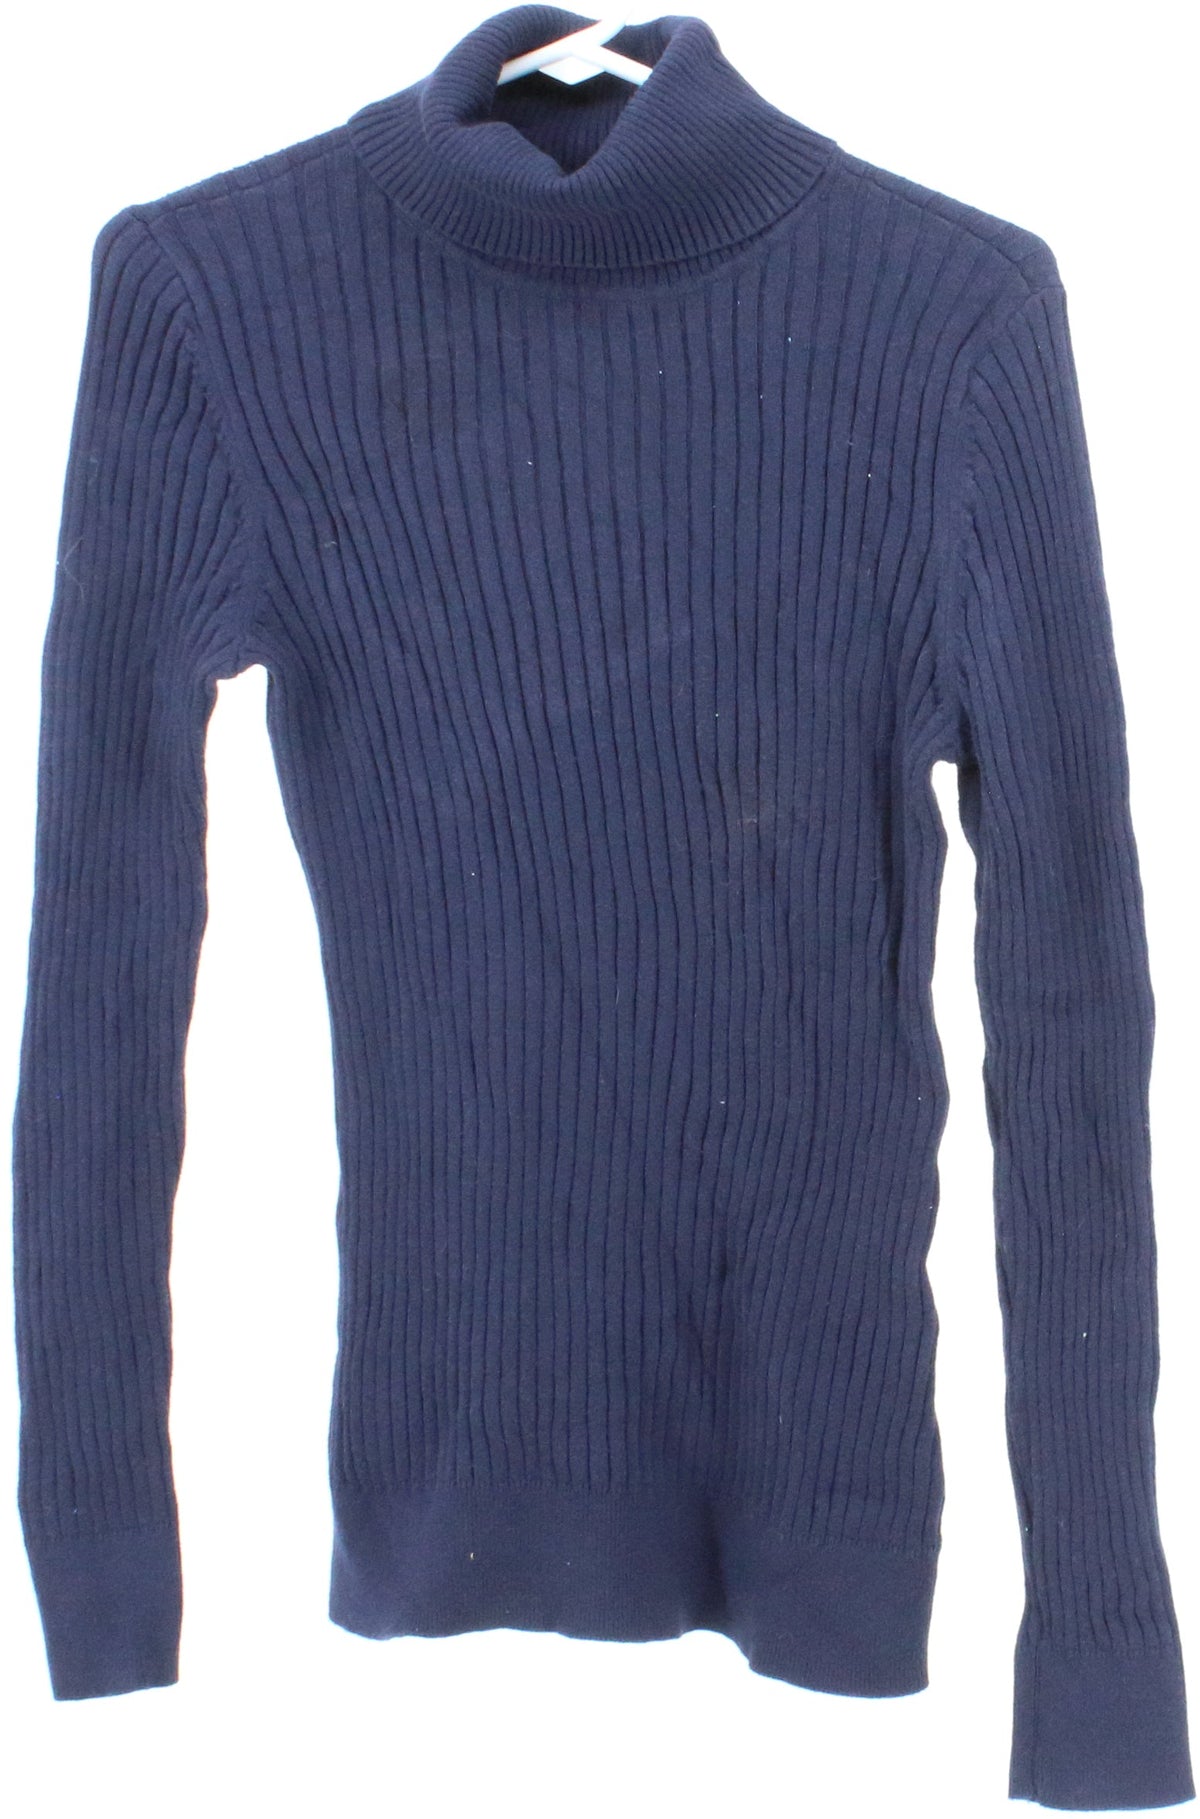 Croft & Barrow Navy Blue Turtleneck Sweater